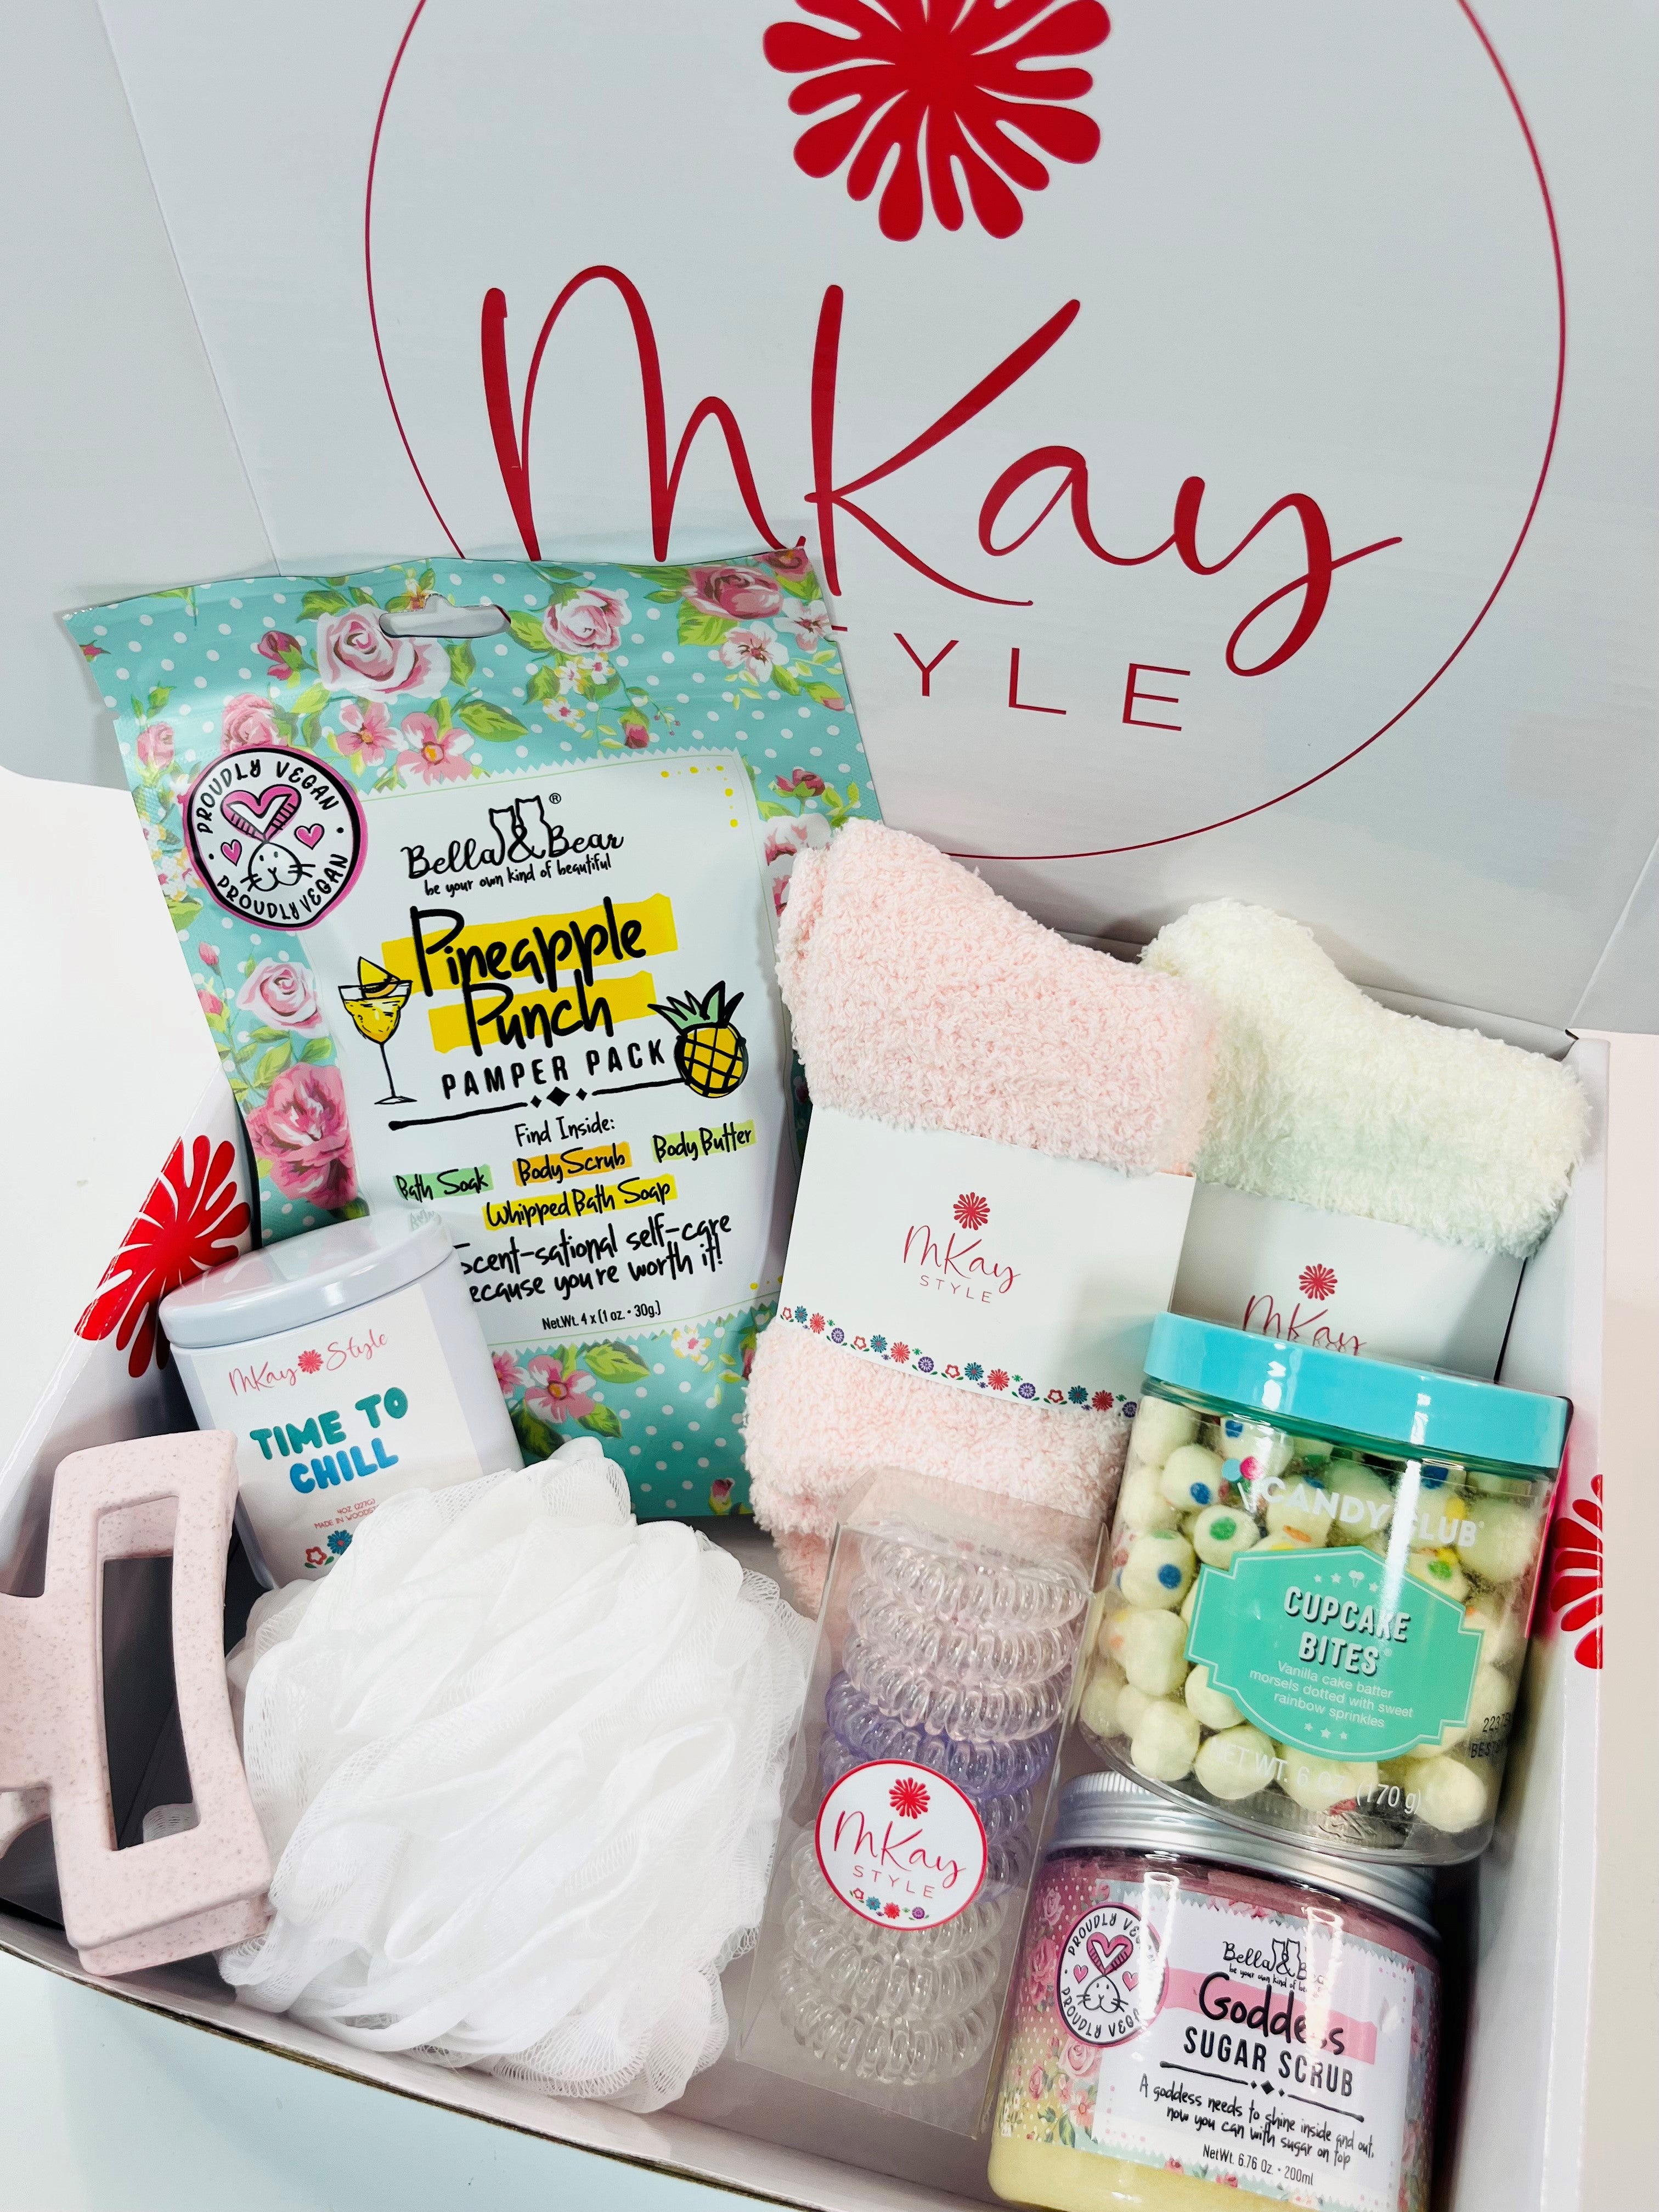 Ulta Cosmetic Gift Basket #3 for Eyes, Lips, and Cheeks - New | eBay